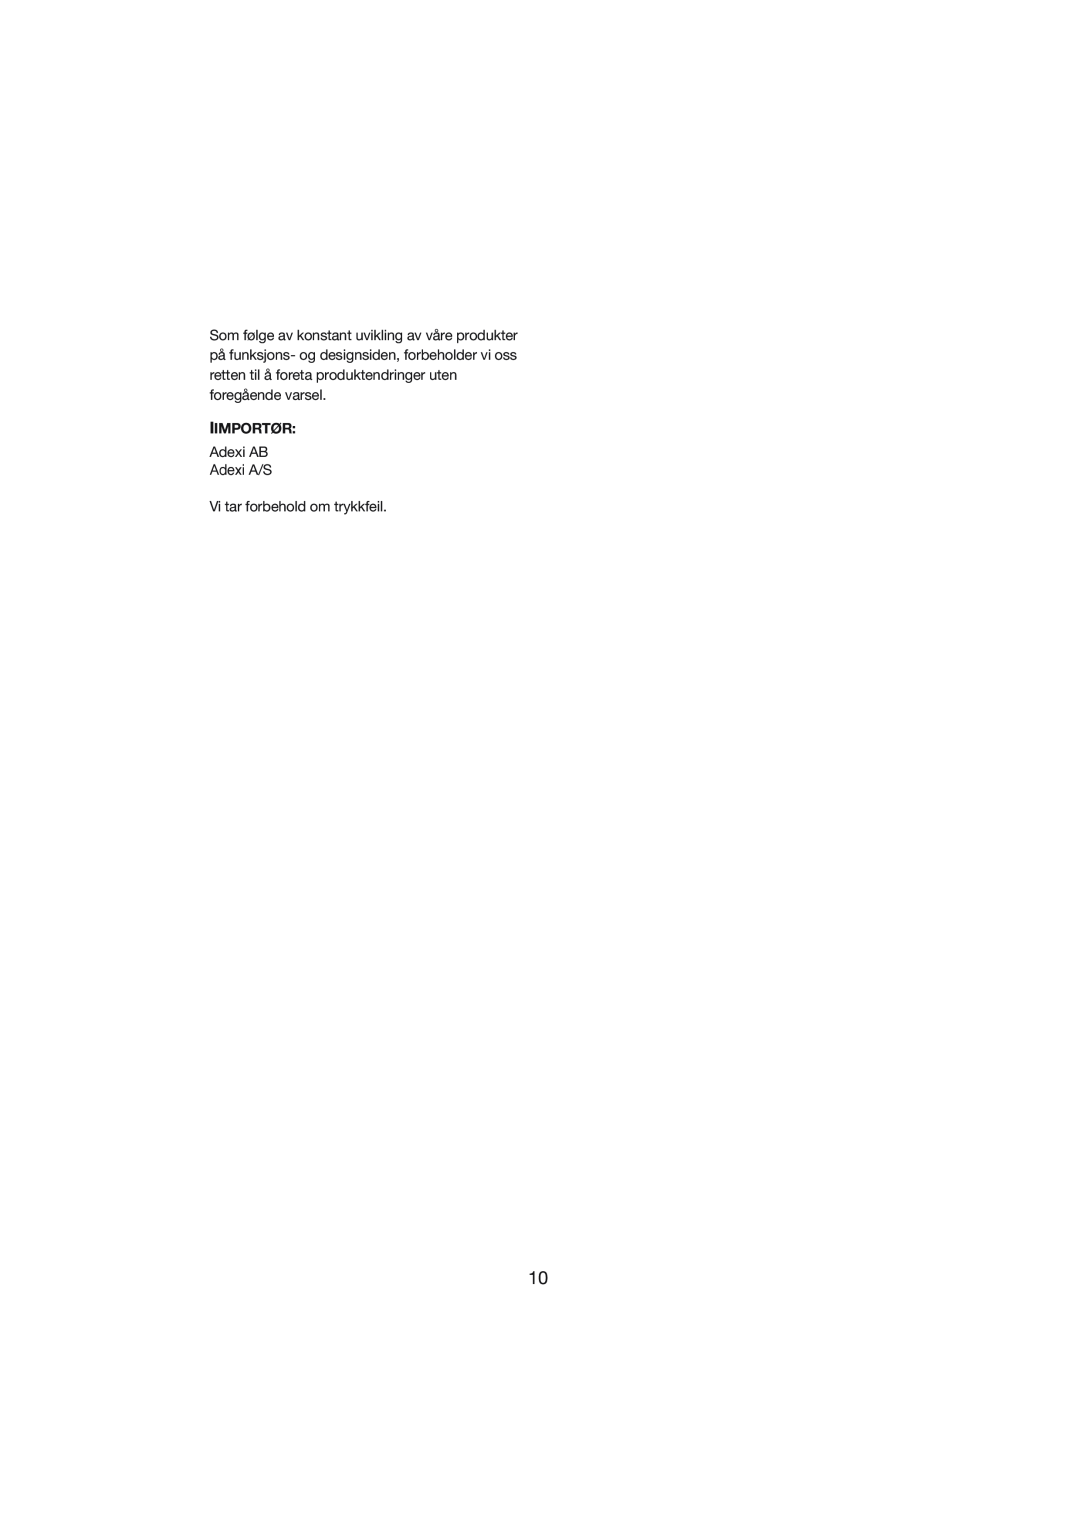 Melissa 245-015 manual Iimportør, Adexi AB Adexi A/S Vi tar forbehold om trykkfeil 